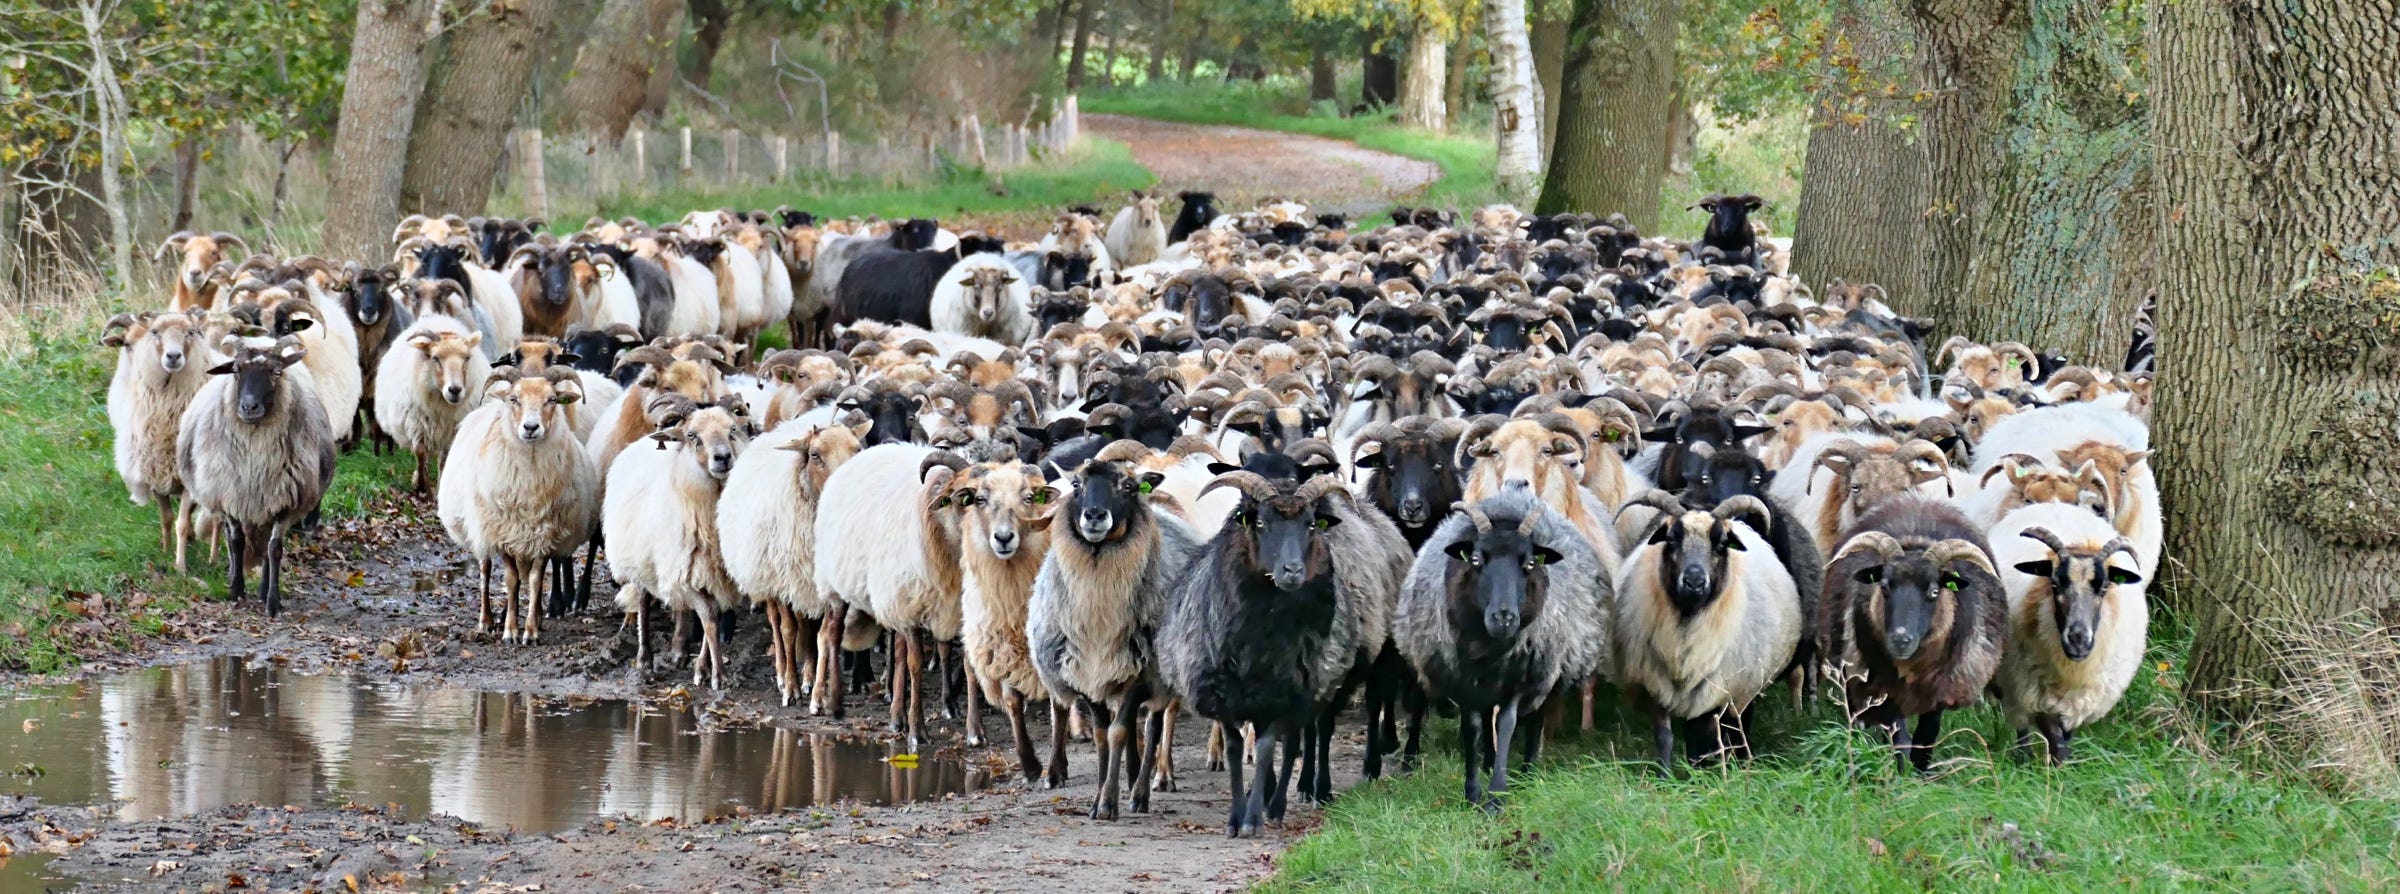 Sheep of Balloërveld, Drenthe, Netherlands